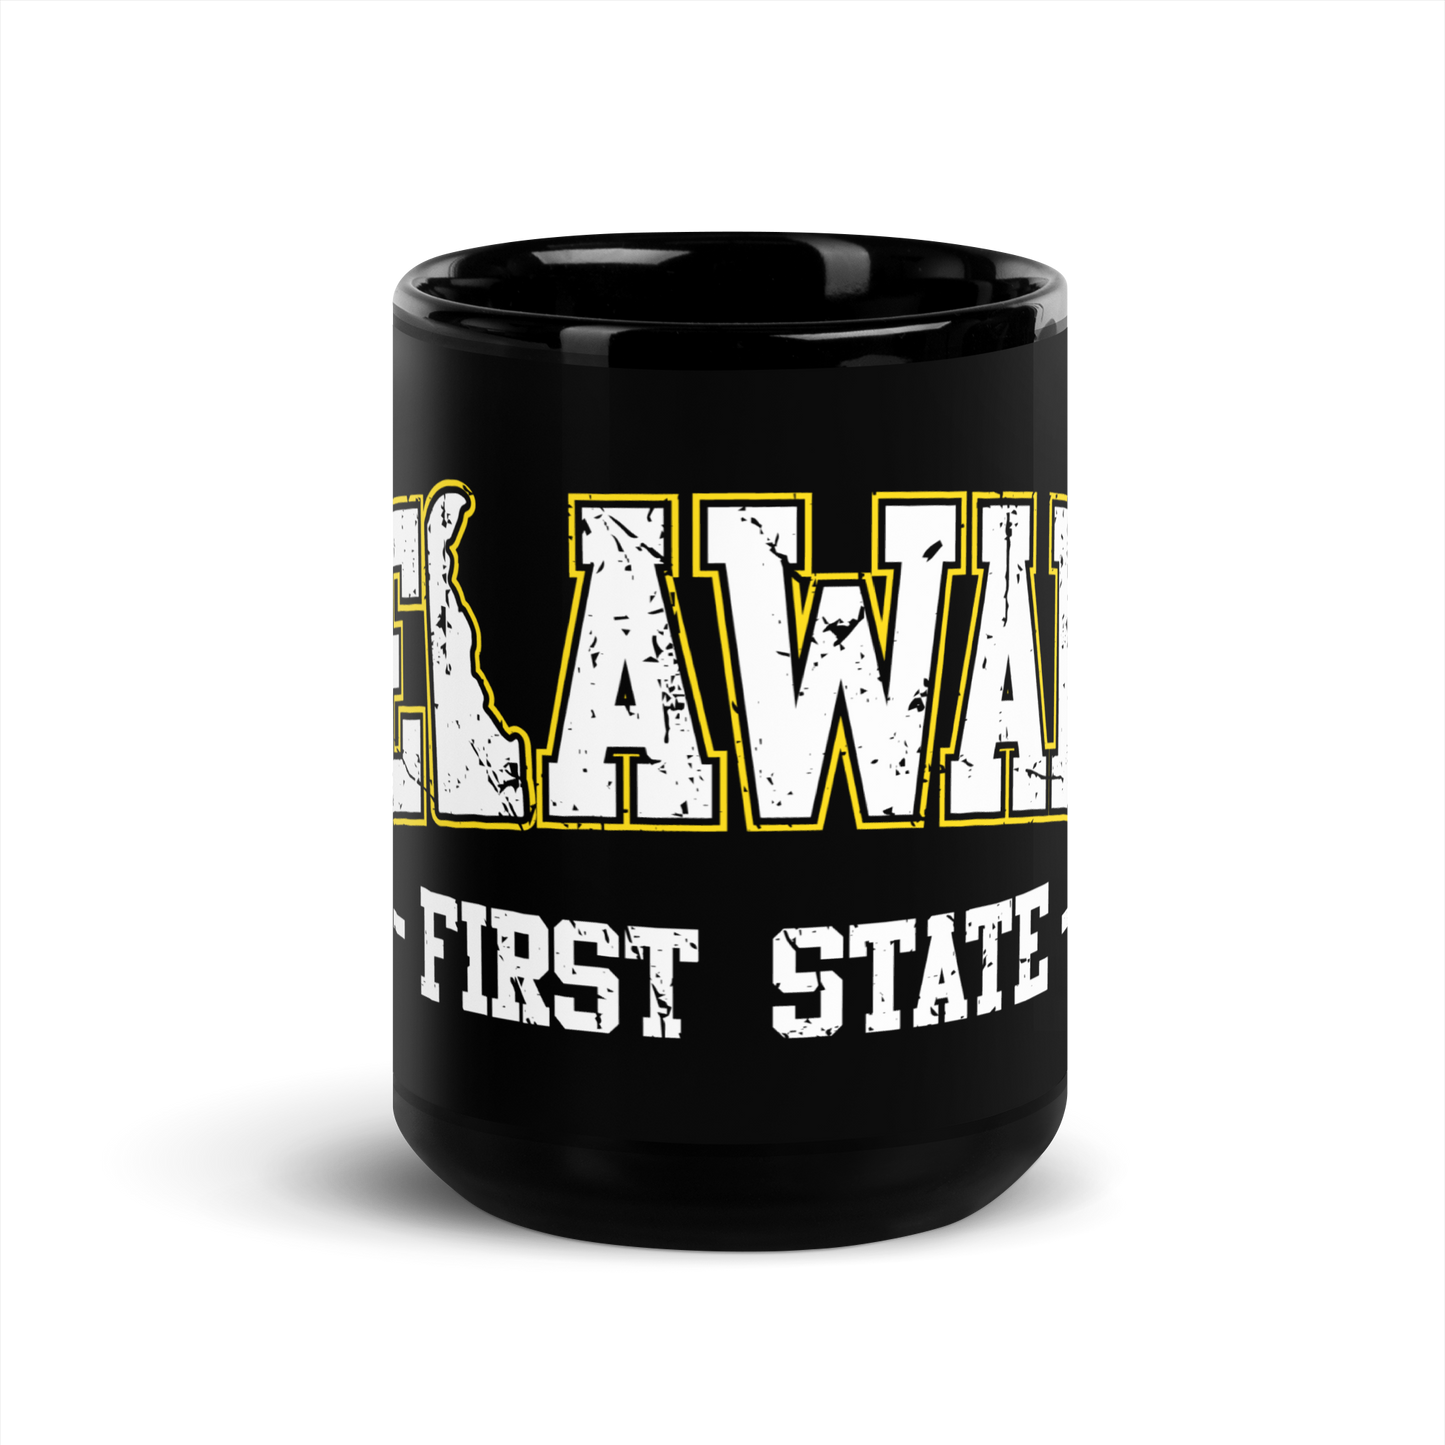 First State Black Glossy Mug